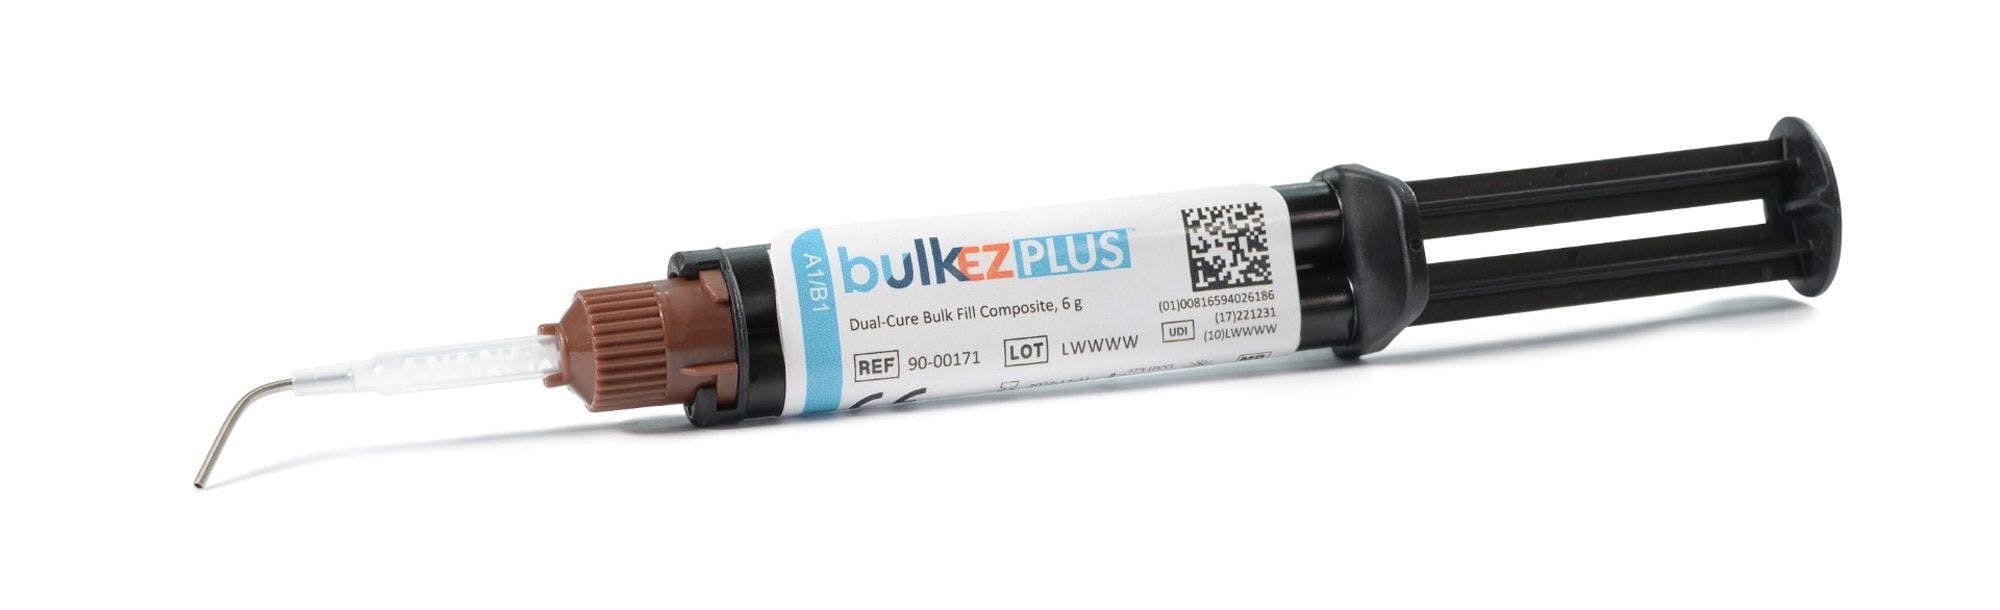 New Bulk EZ Plus from Zest Dental Improves on Bulk EZ Composite